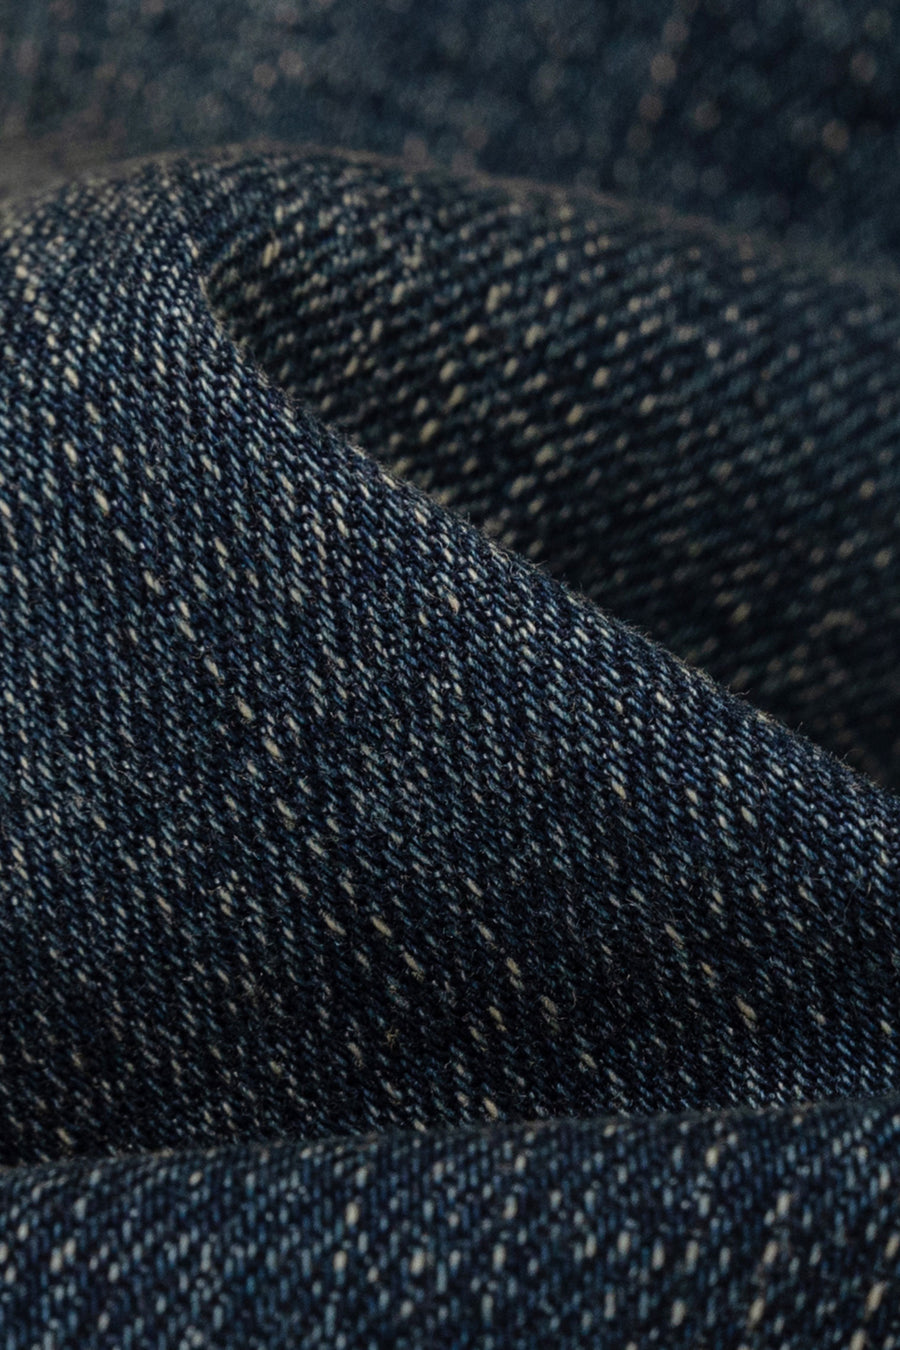 Stitch Lined Denim Wide Jeans